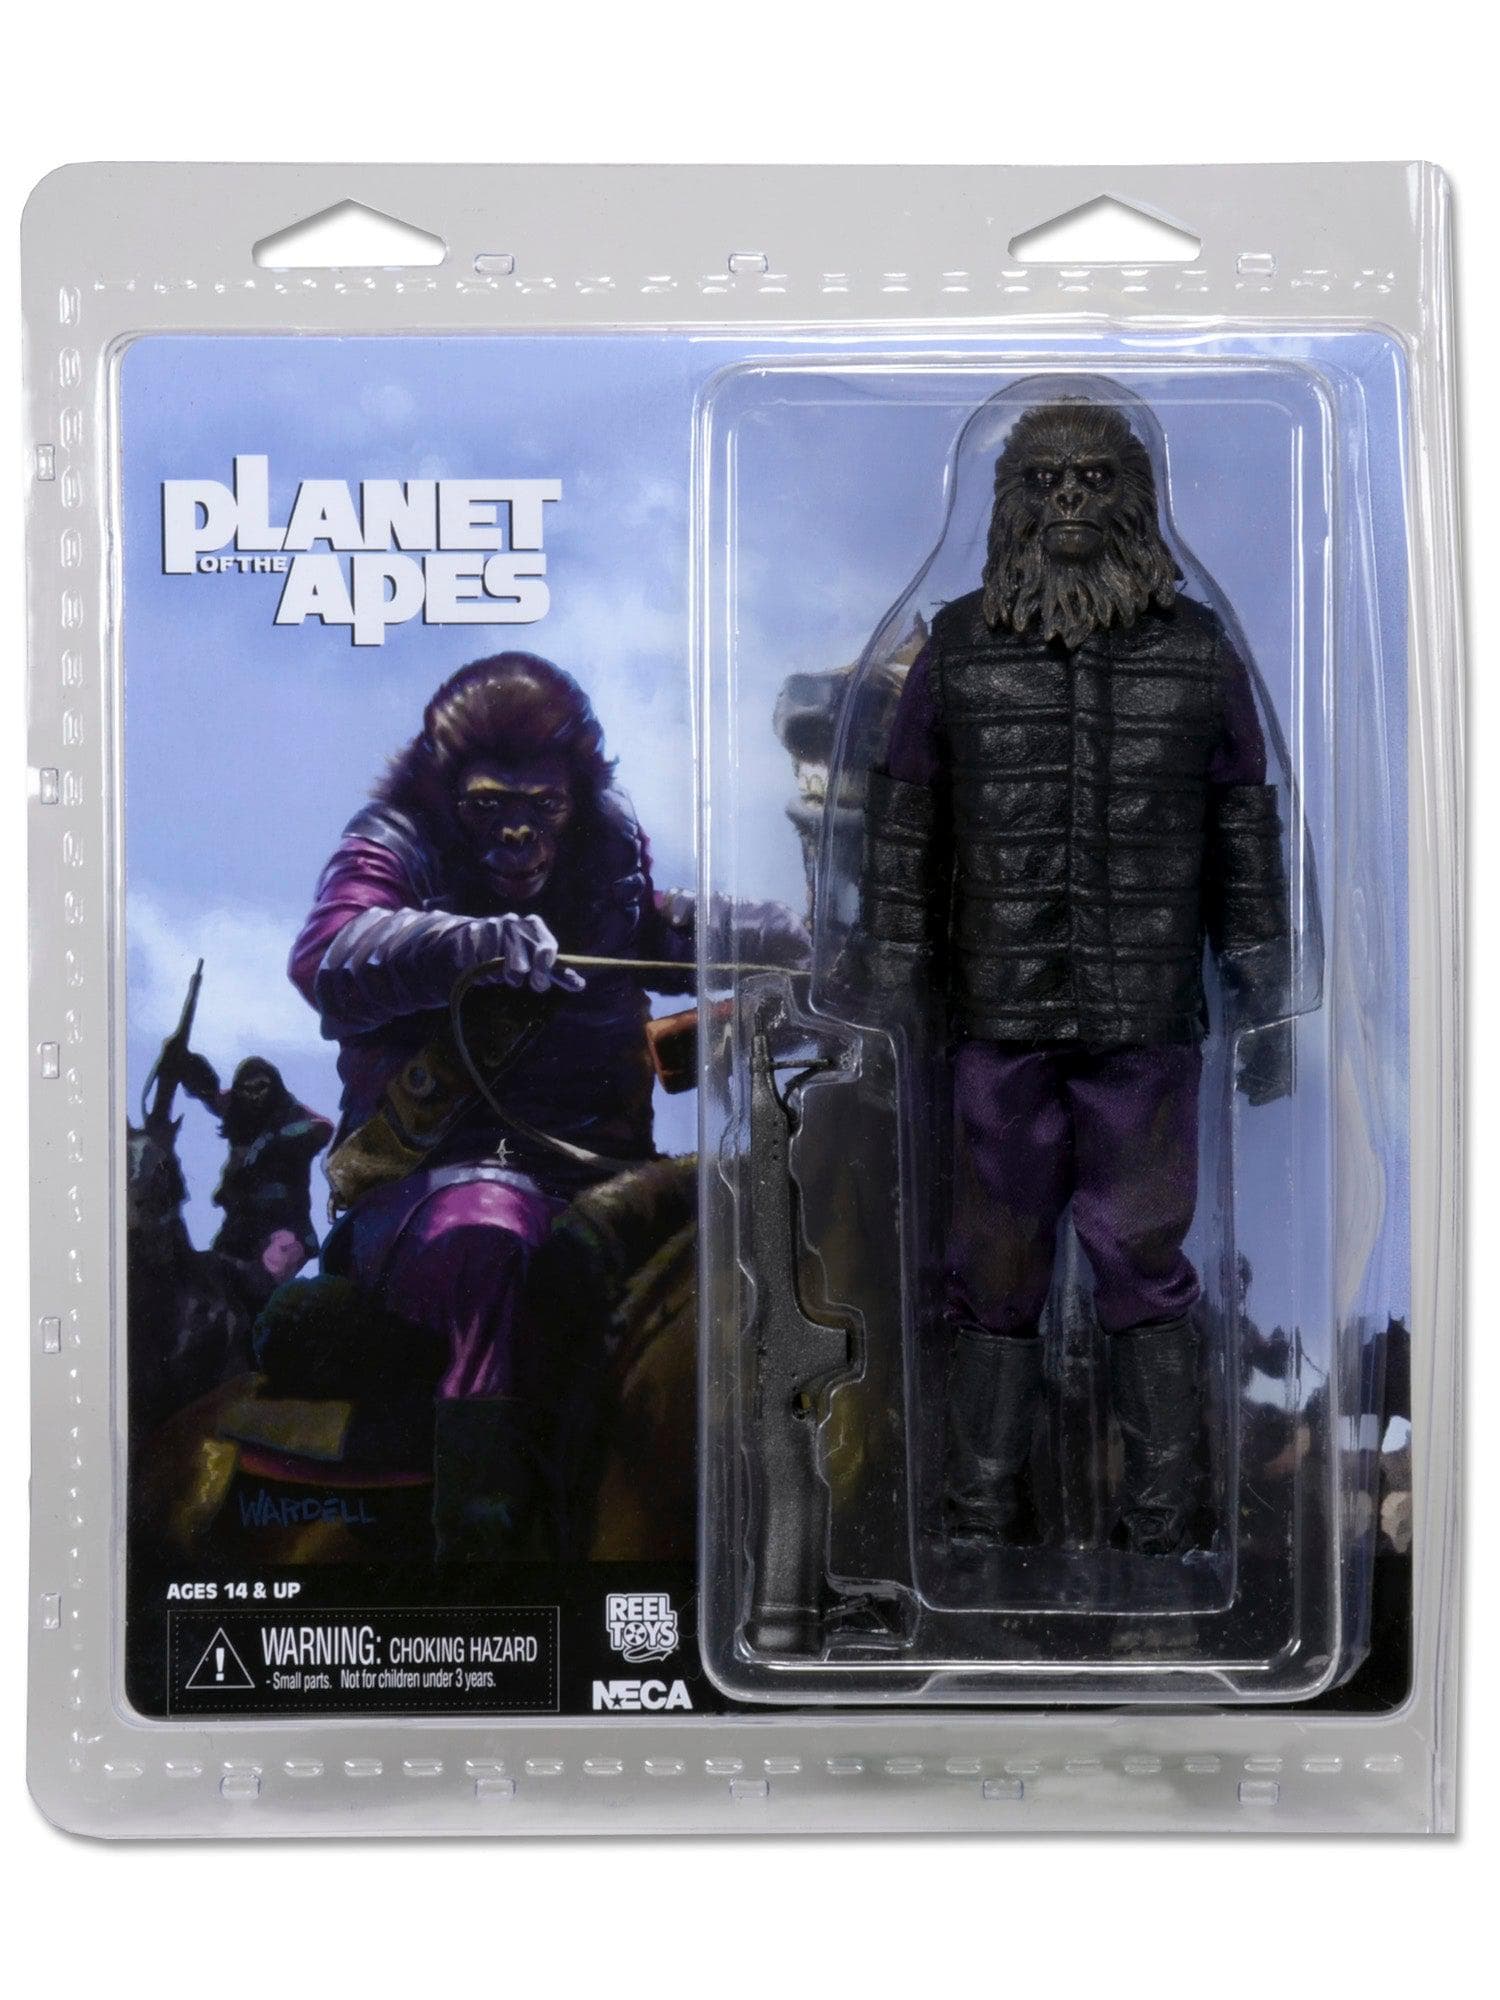 NECA - Planet of the Apes - 8" Clothed Figure - Classic Gorilla - costumes.com